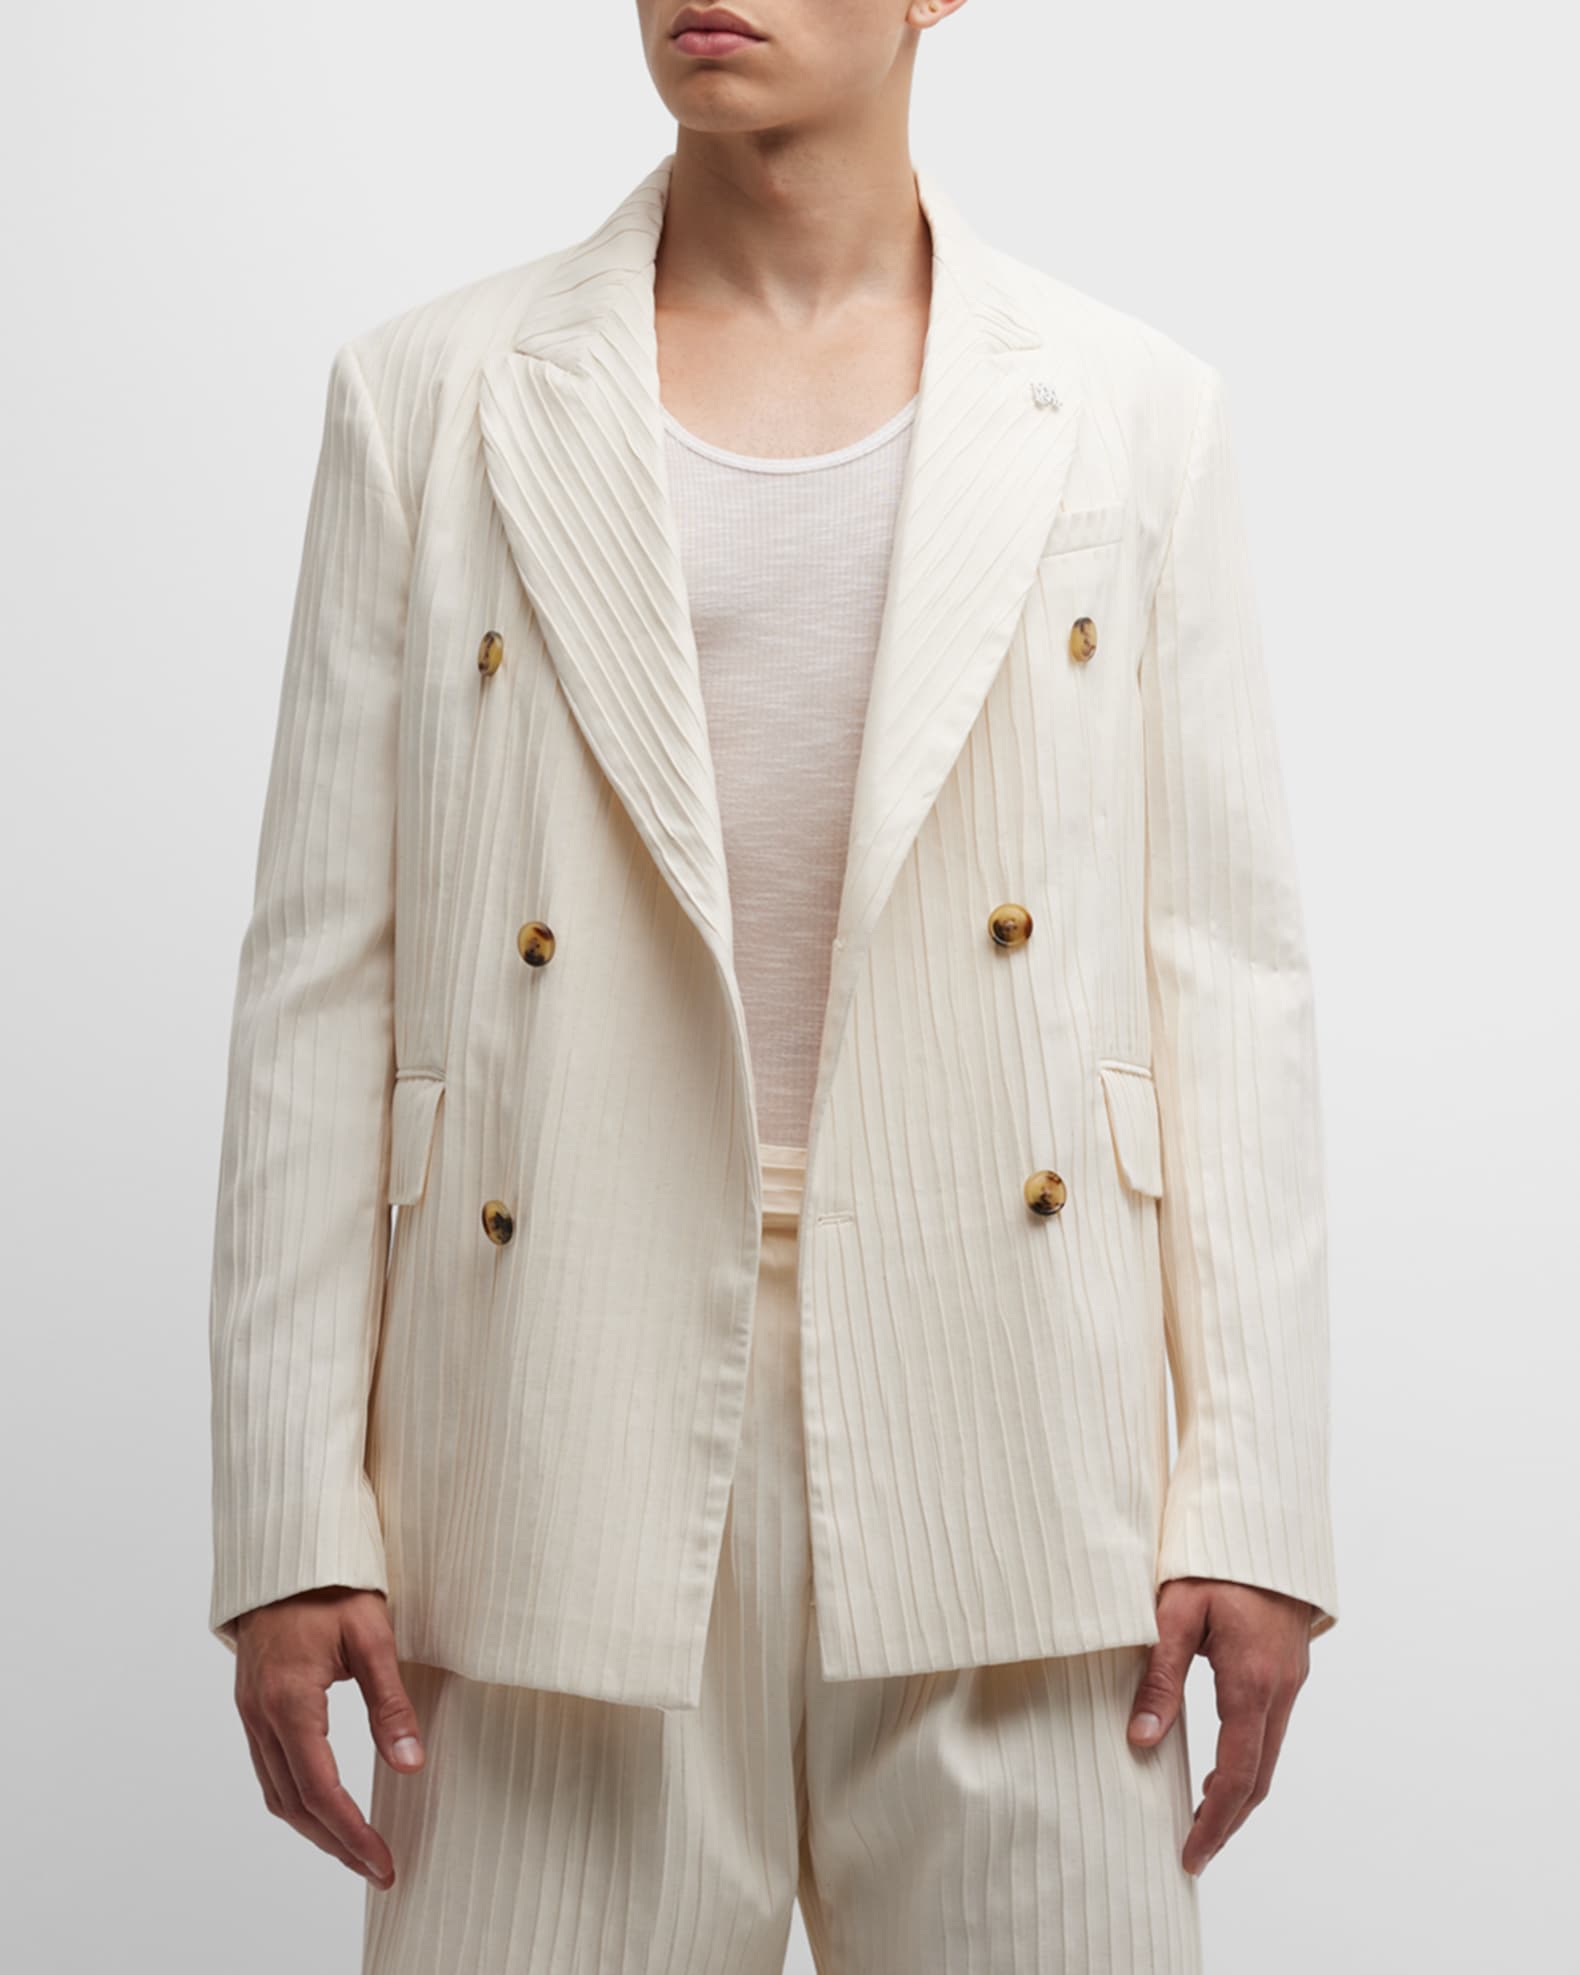 Men's Versace La Greca Monogram Jacquard Wool Blend Suit Jacket